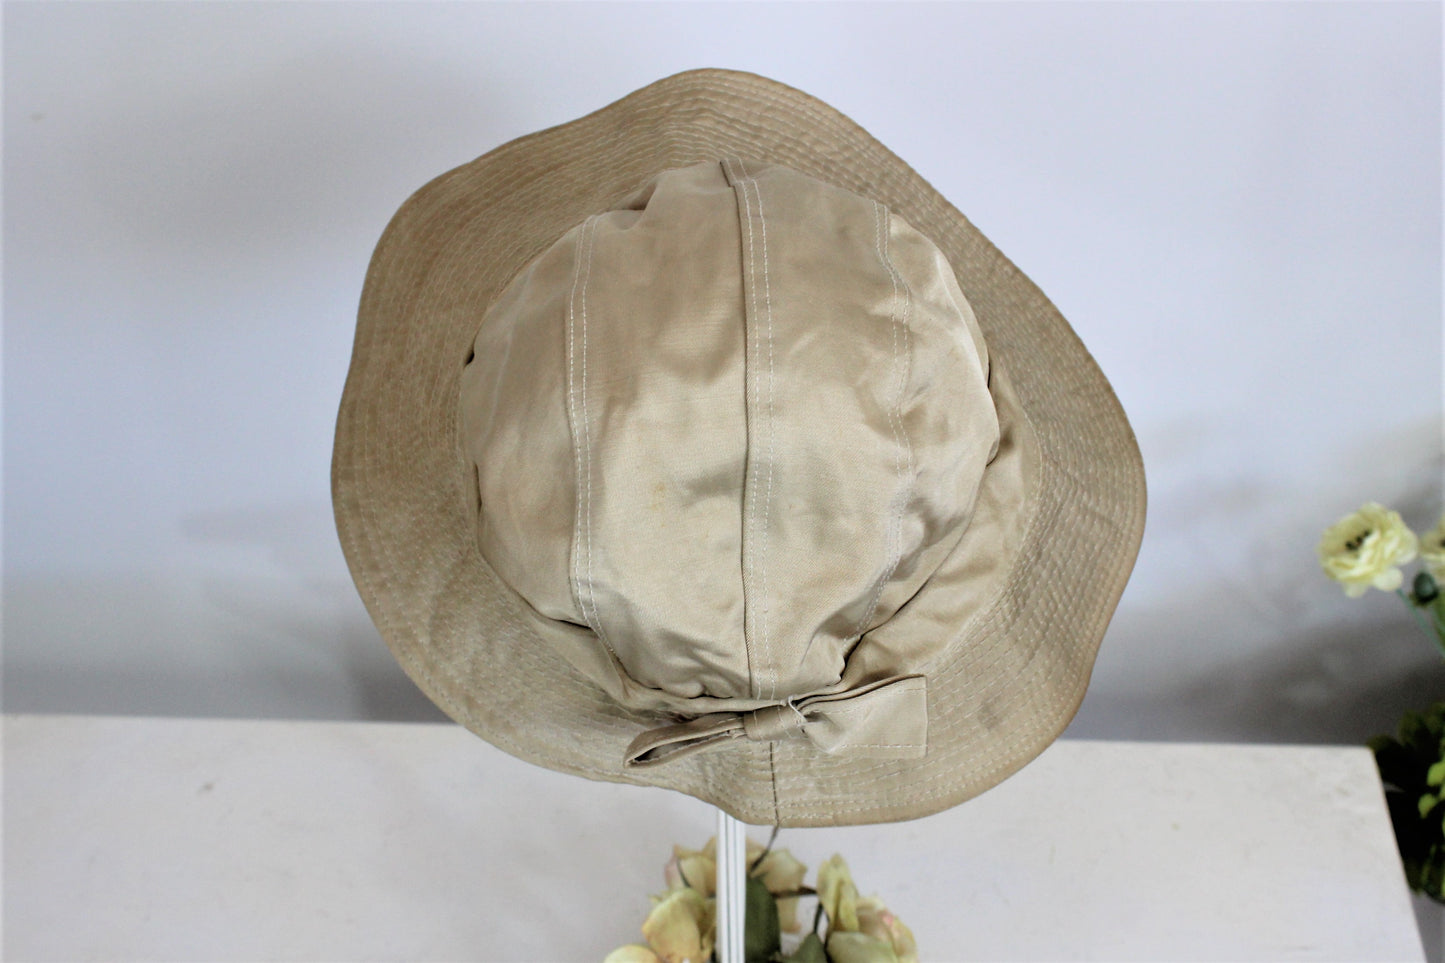 Vintage 1940s Women's Sun Hat by New York Creation